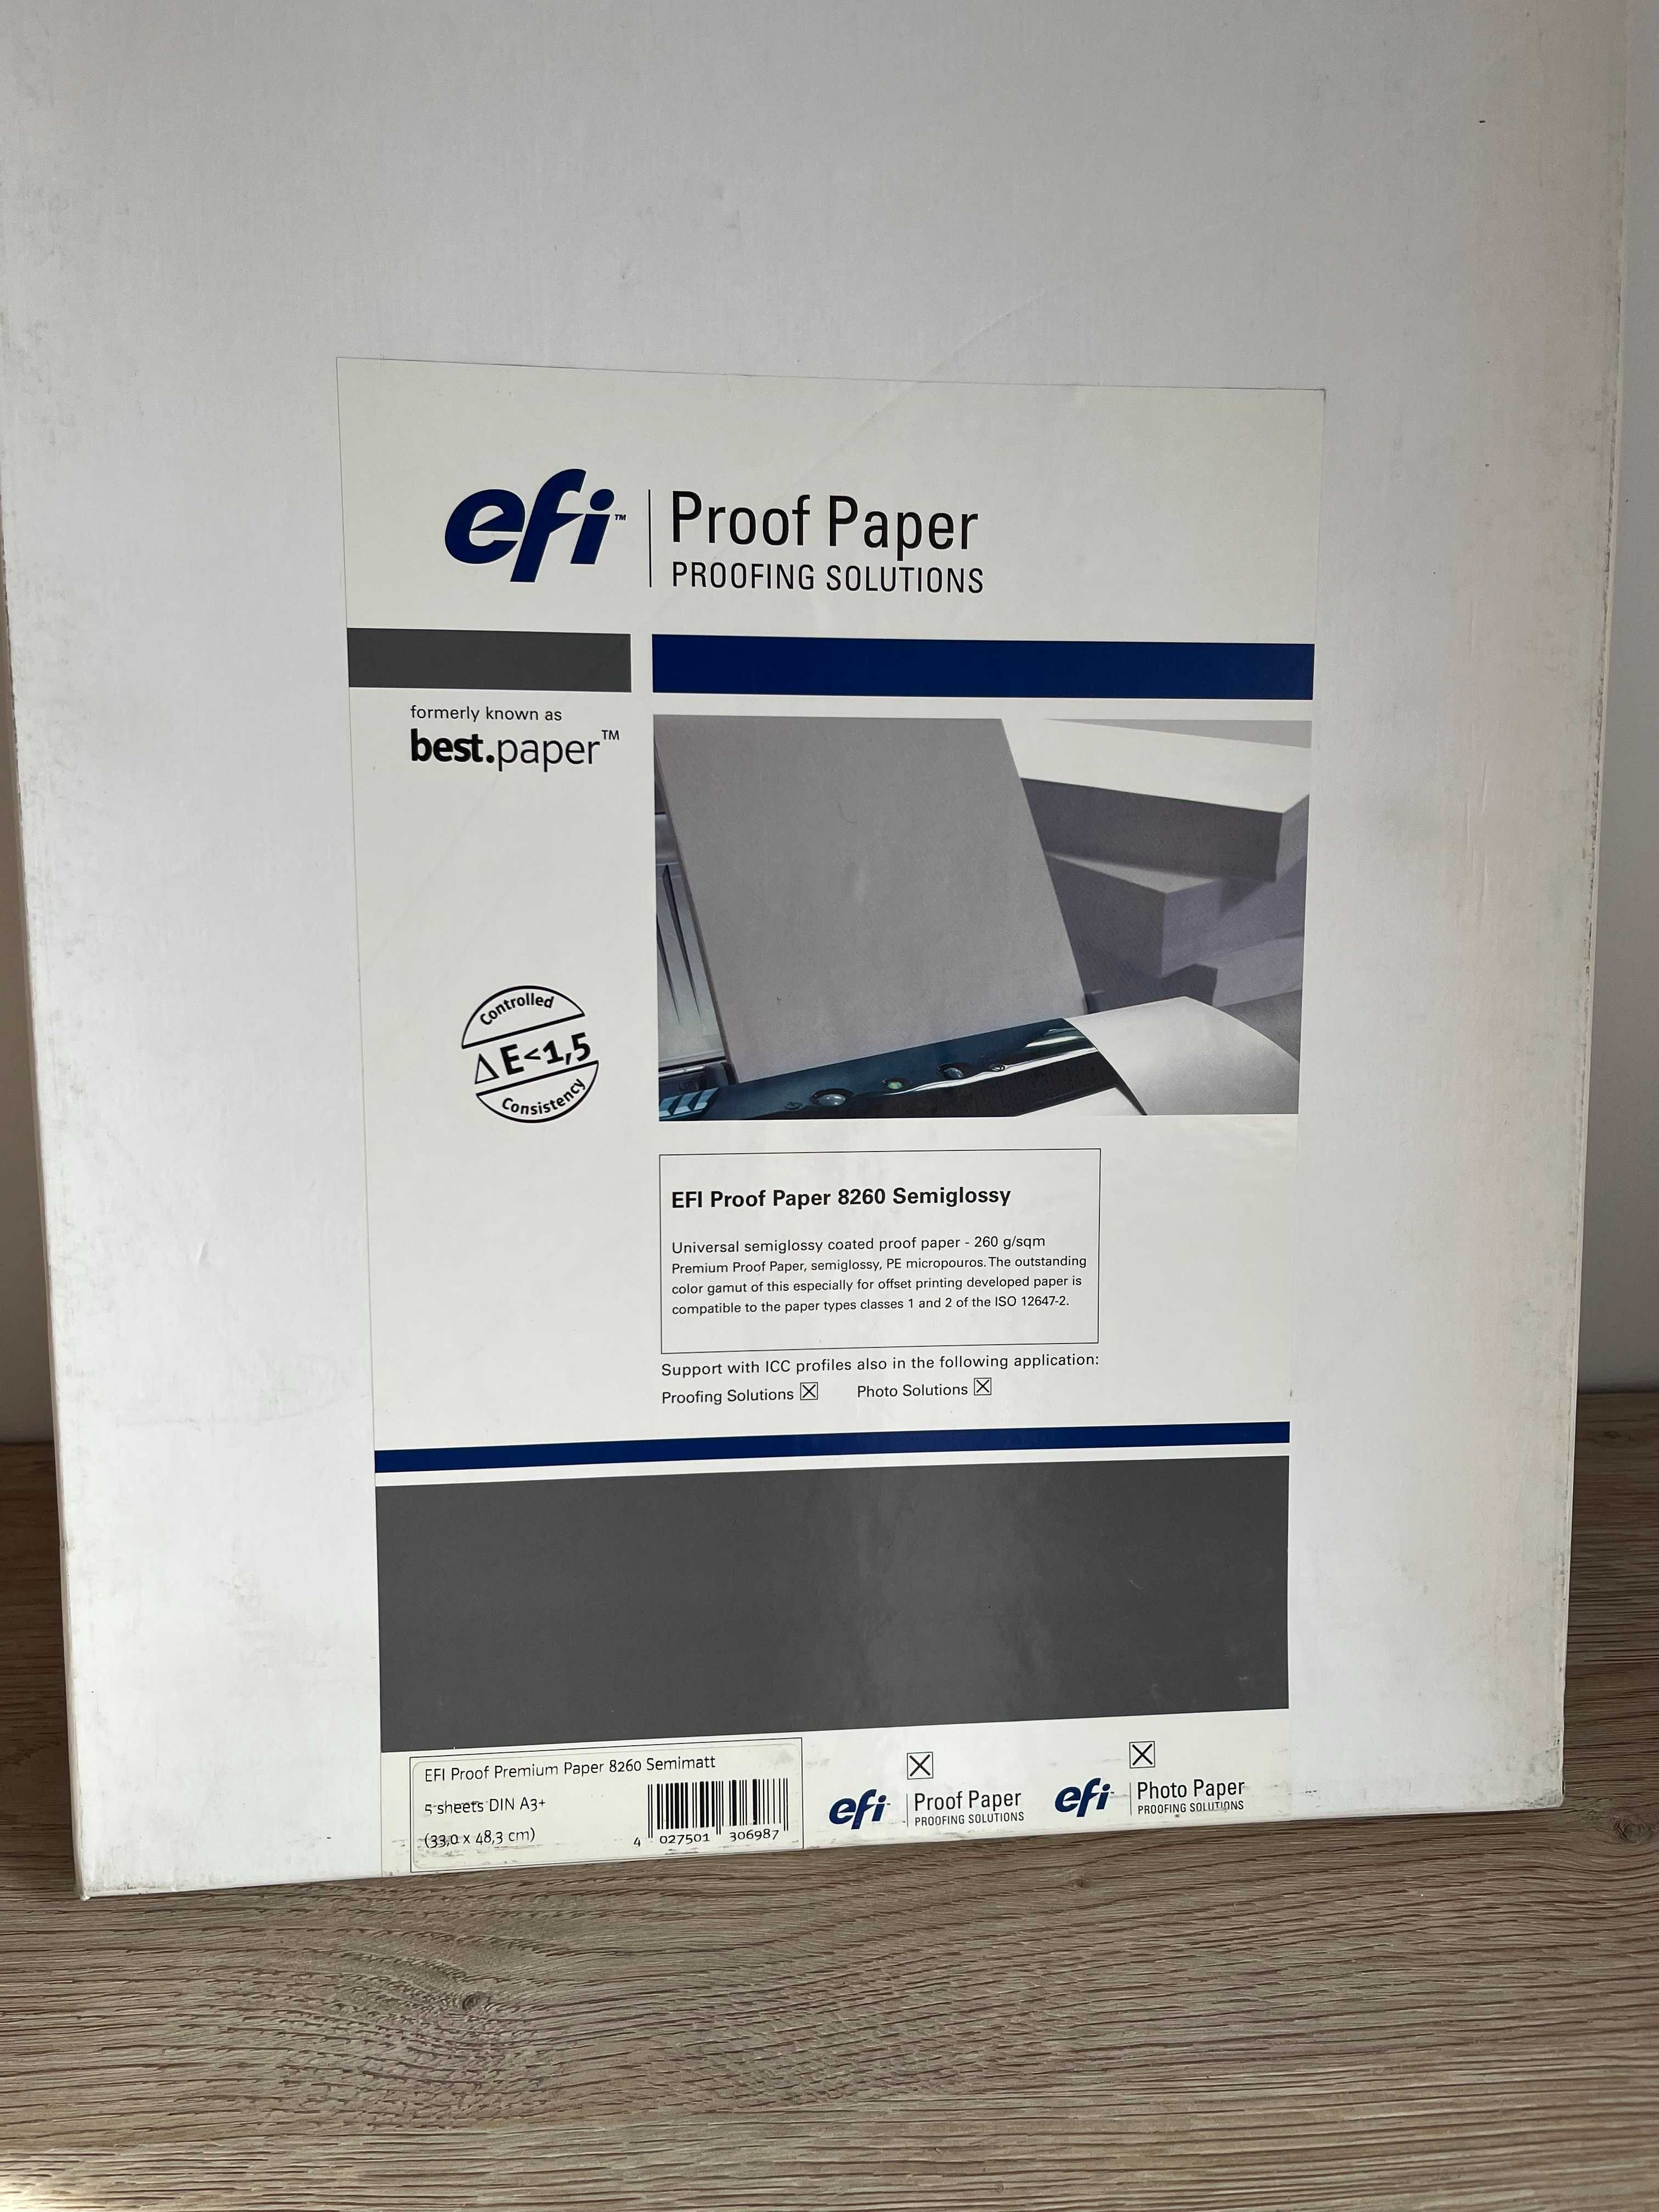 EFI Proof Premium papier 8260 Semimatt A3+ opak 5 arkuszy